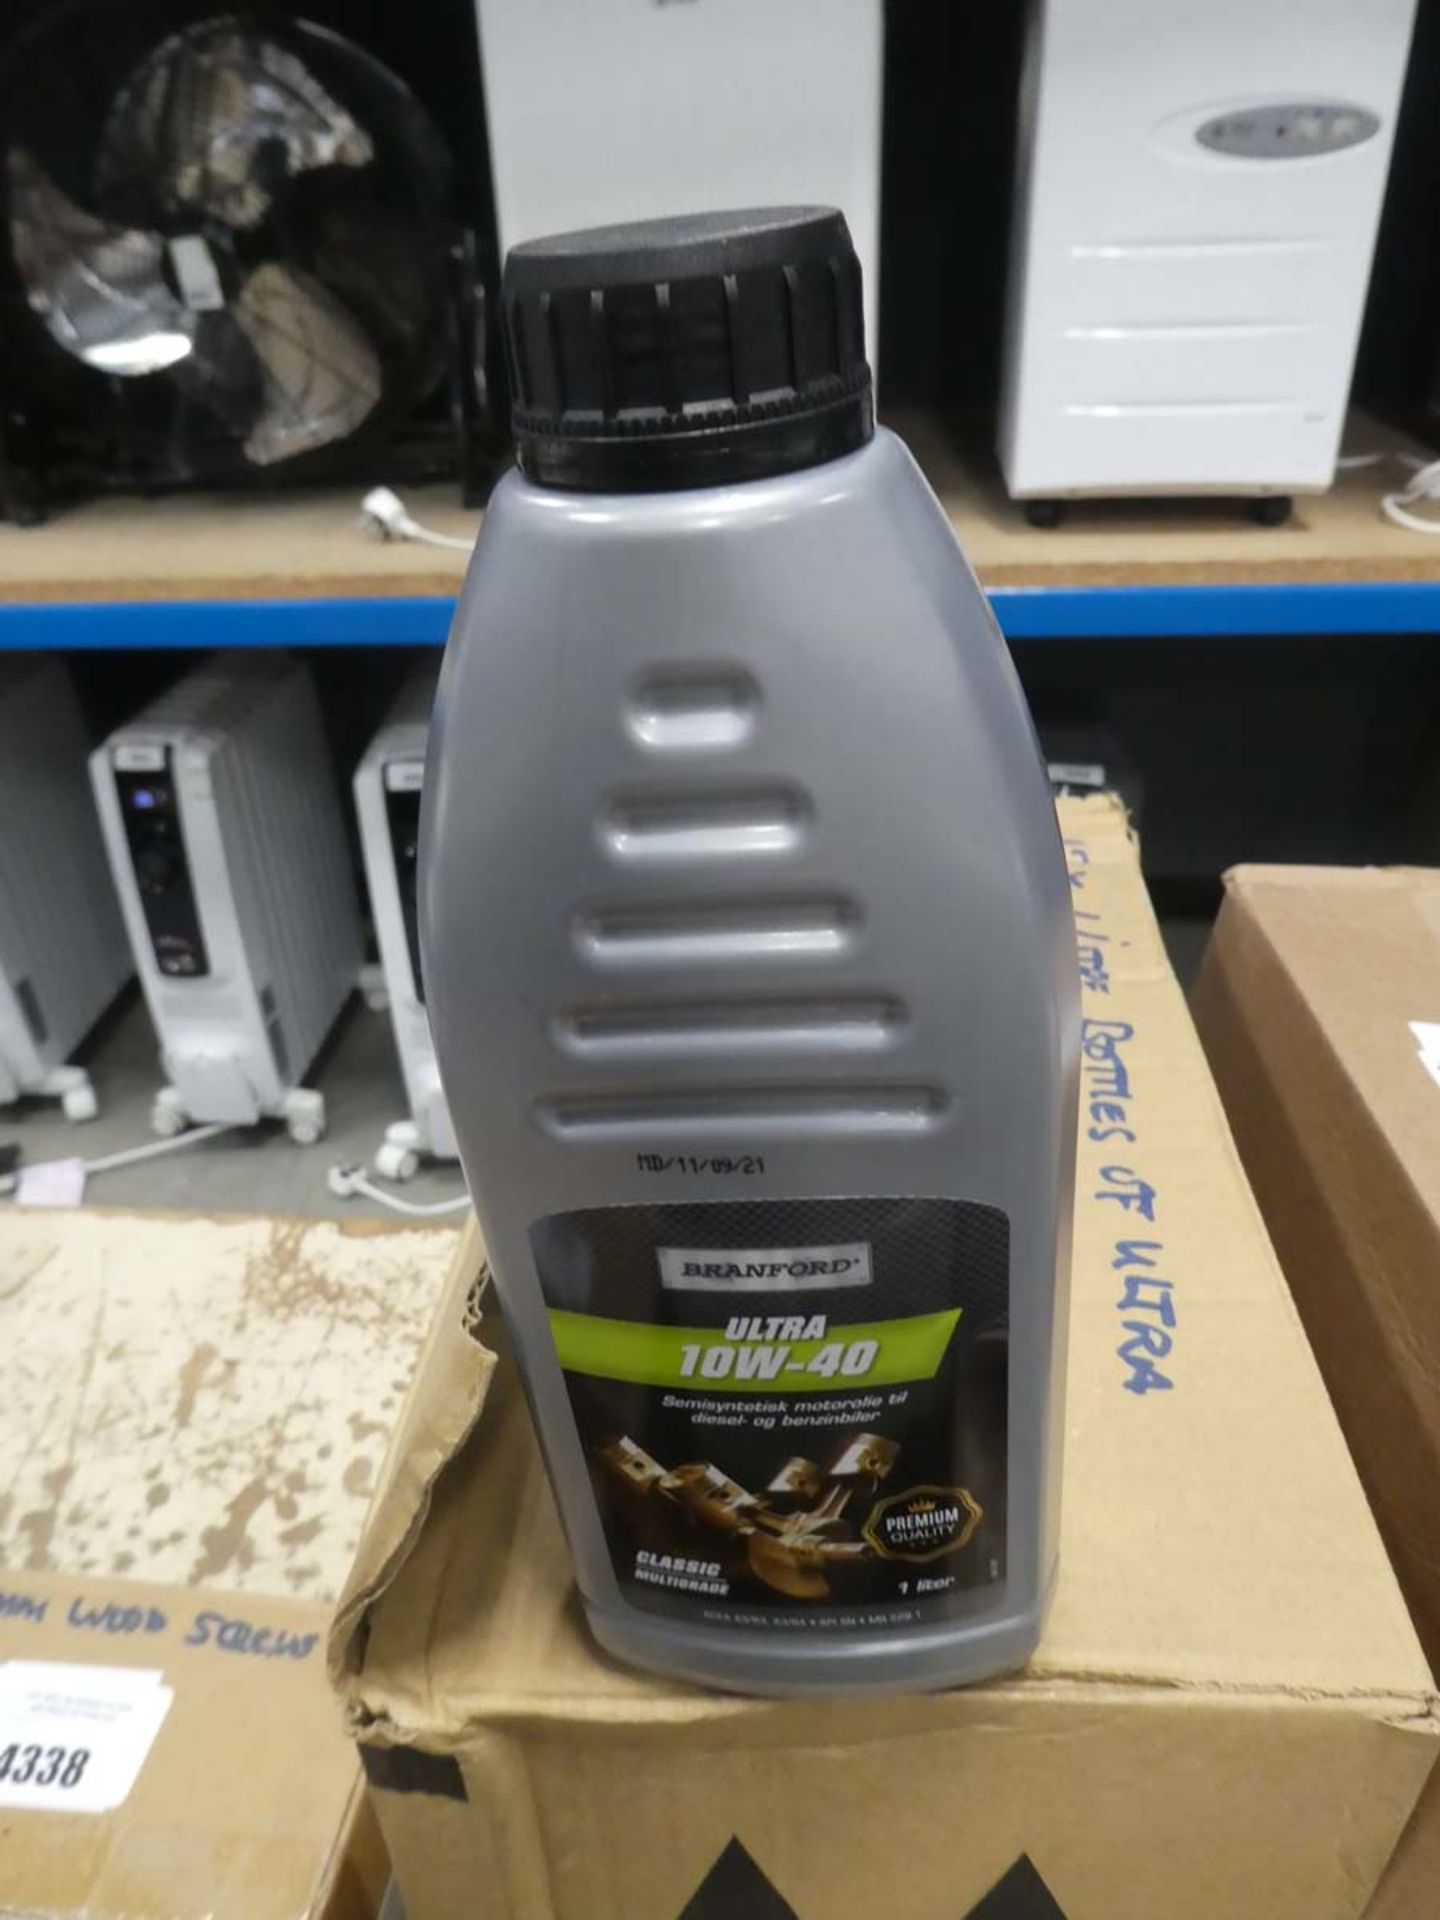 Twelve 1L bottles of Ultra 10w-40 motor oil